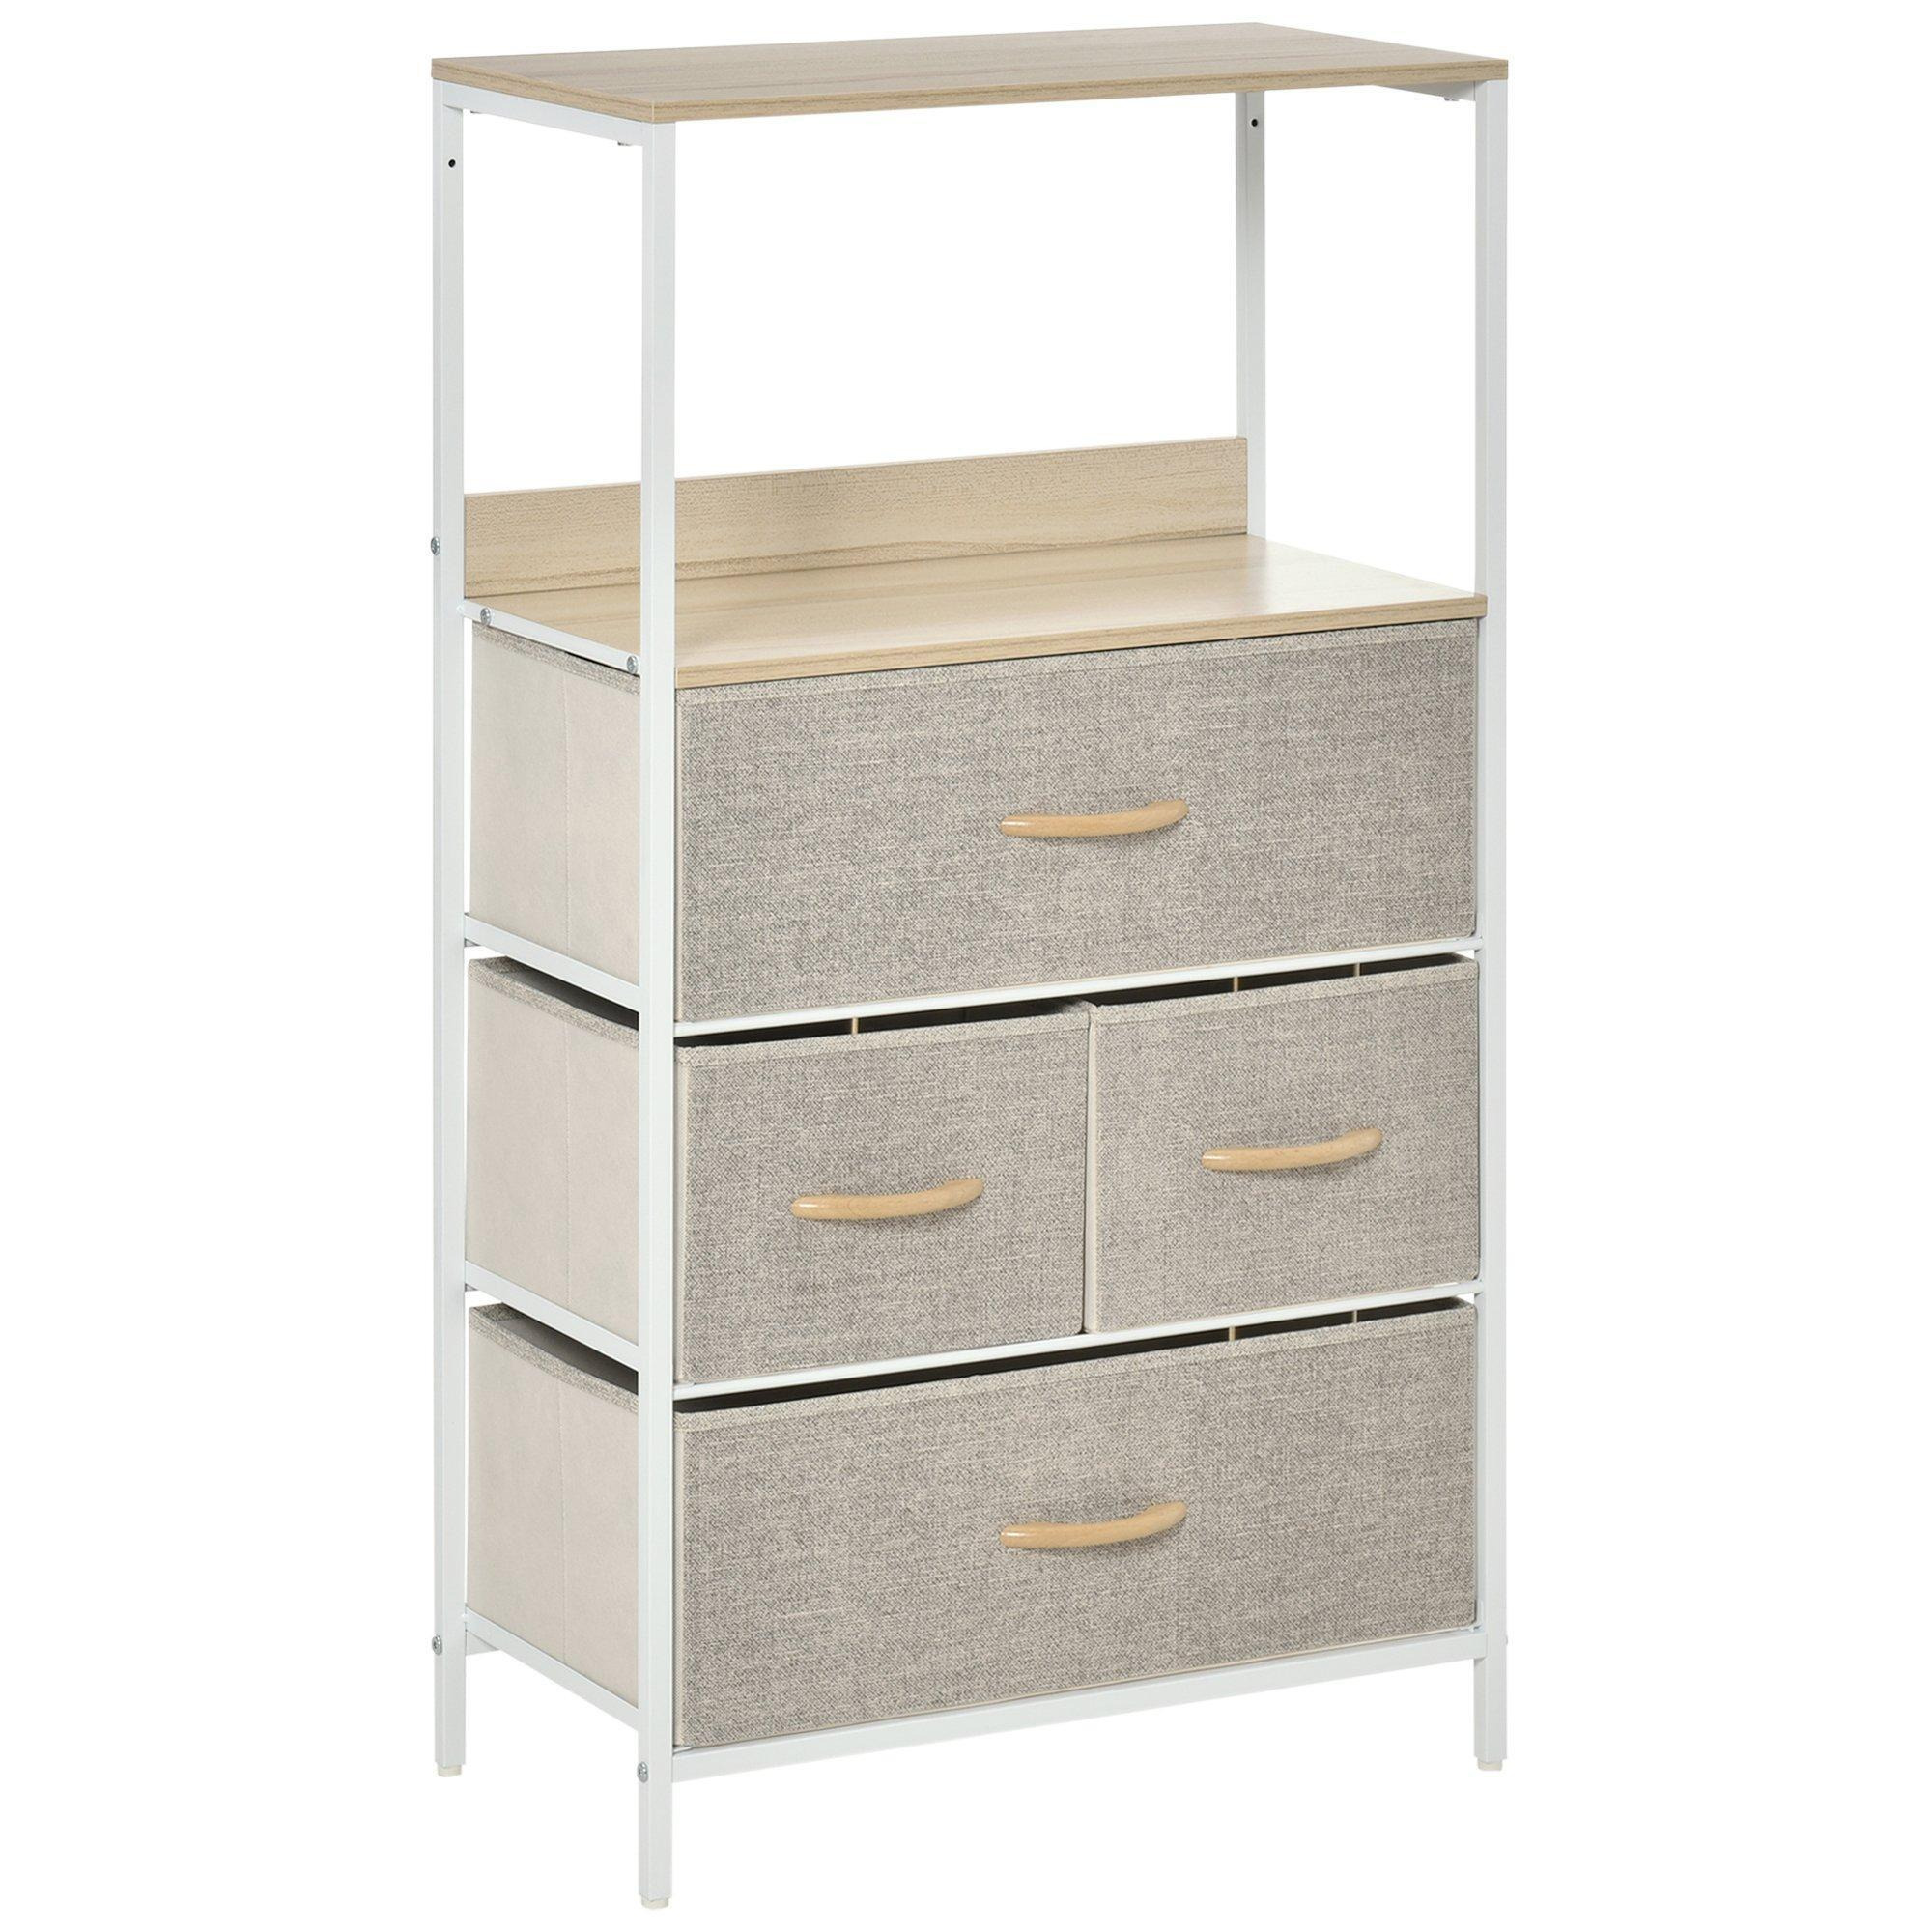 4 Drawer Storage Chest Unit Home Shelves Home Living Room Bedroom - image 1